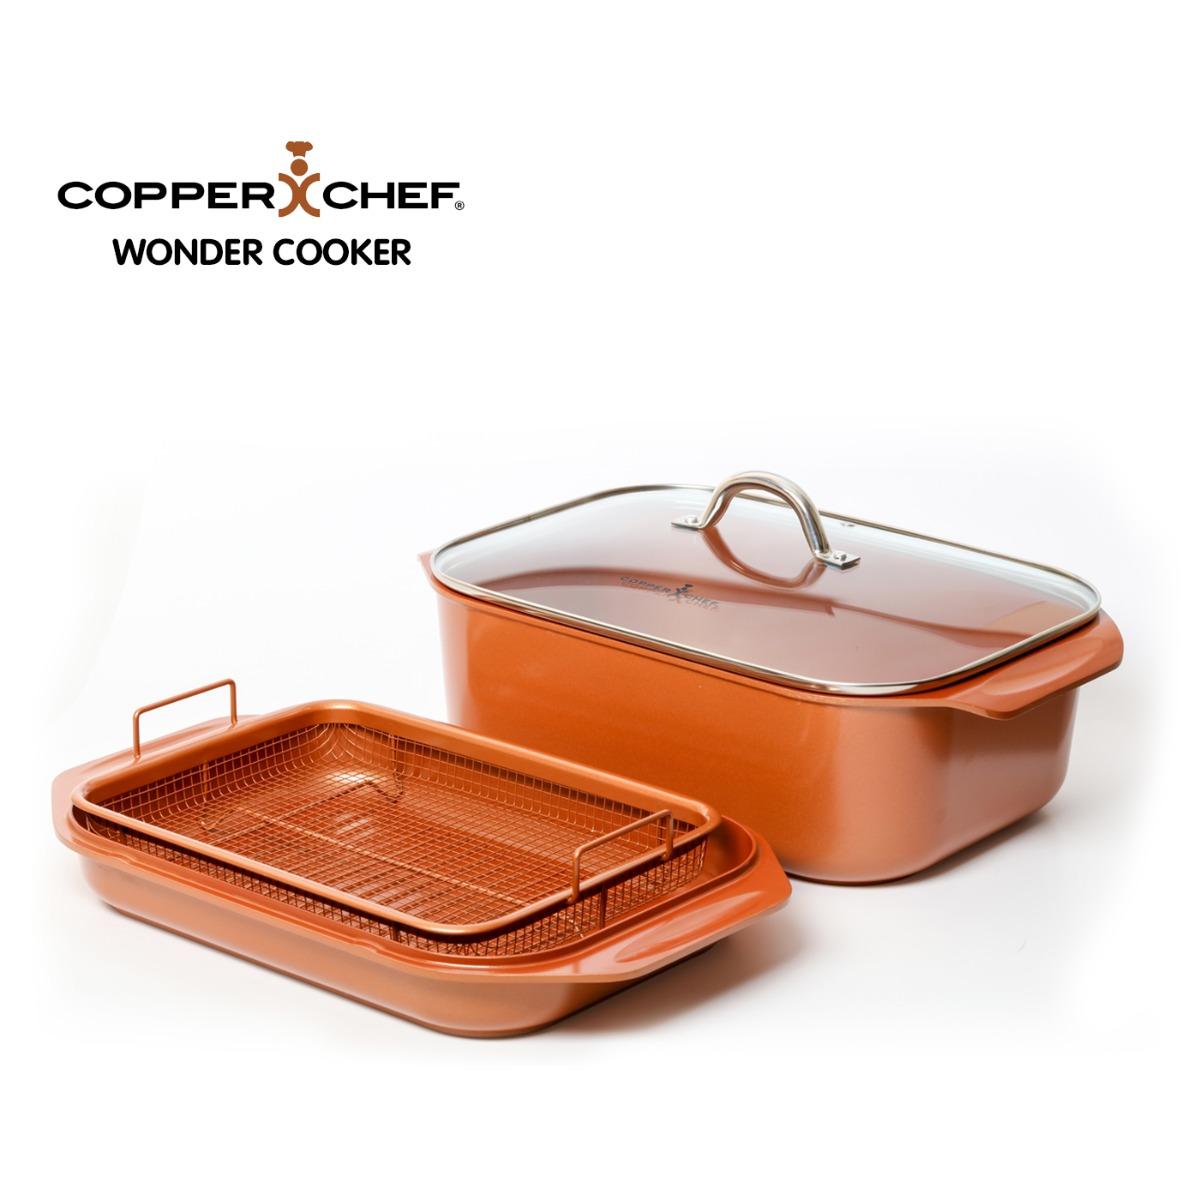 copperchef Copper Chef Wonder Cooker, Combo Offer, 540-900130